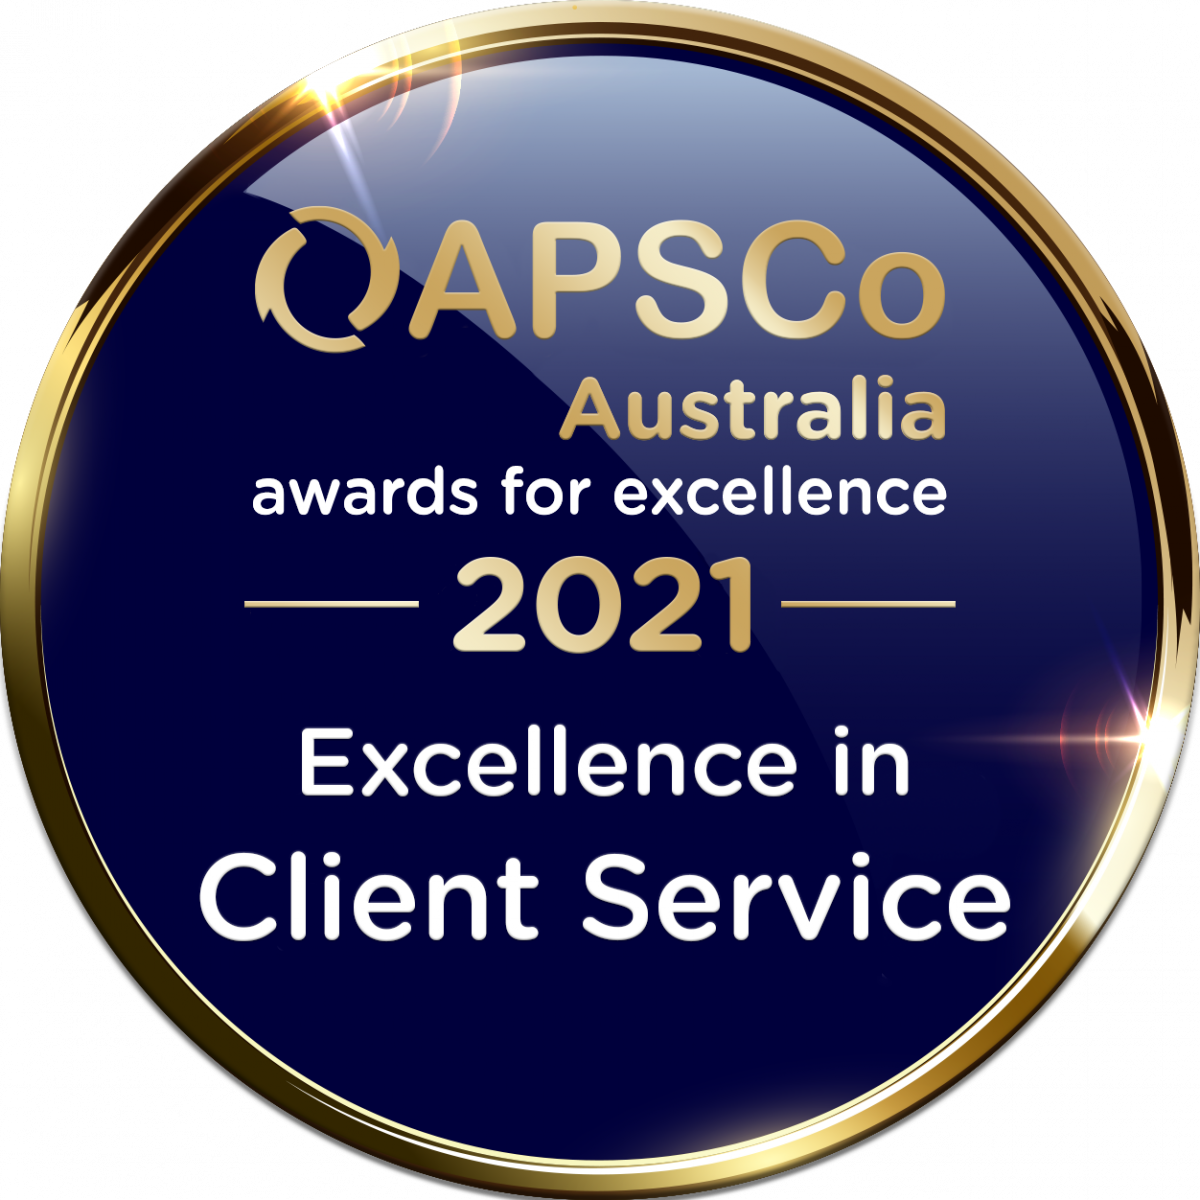 Excellence in Client Service - APSCo Australia